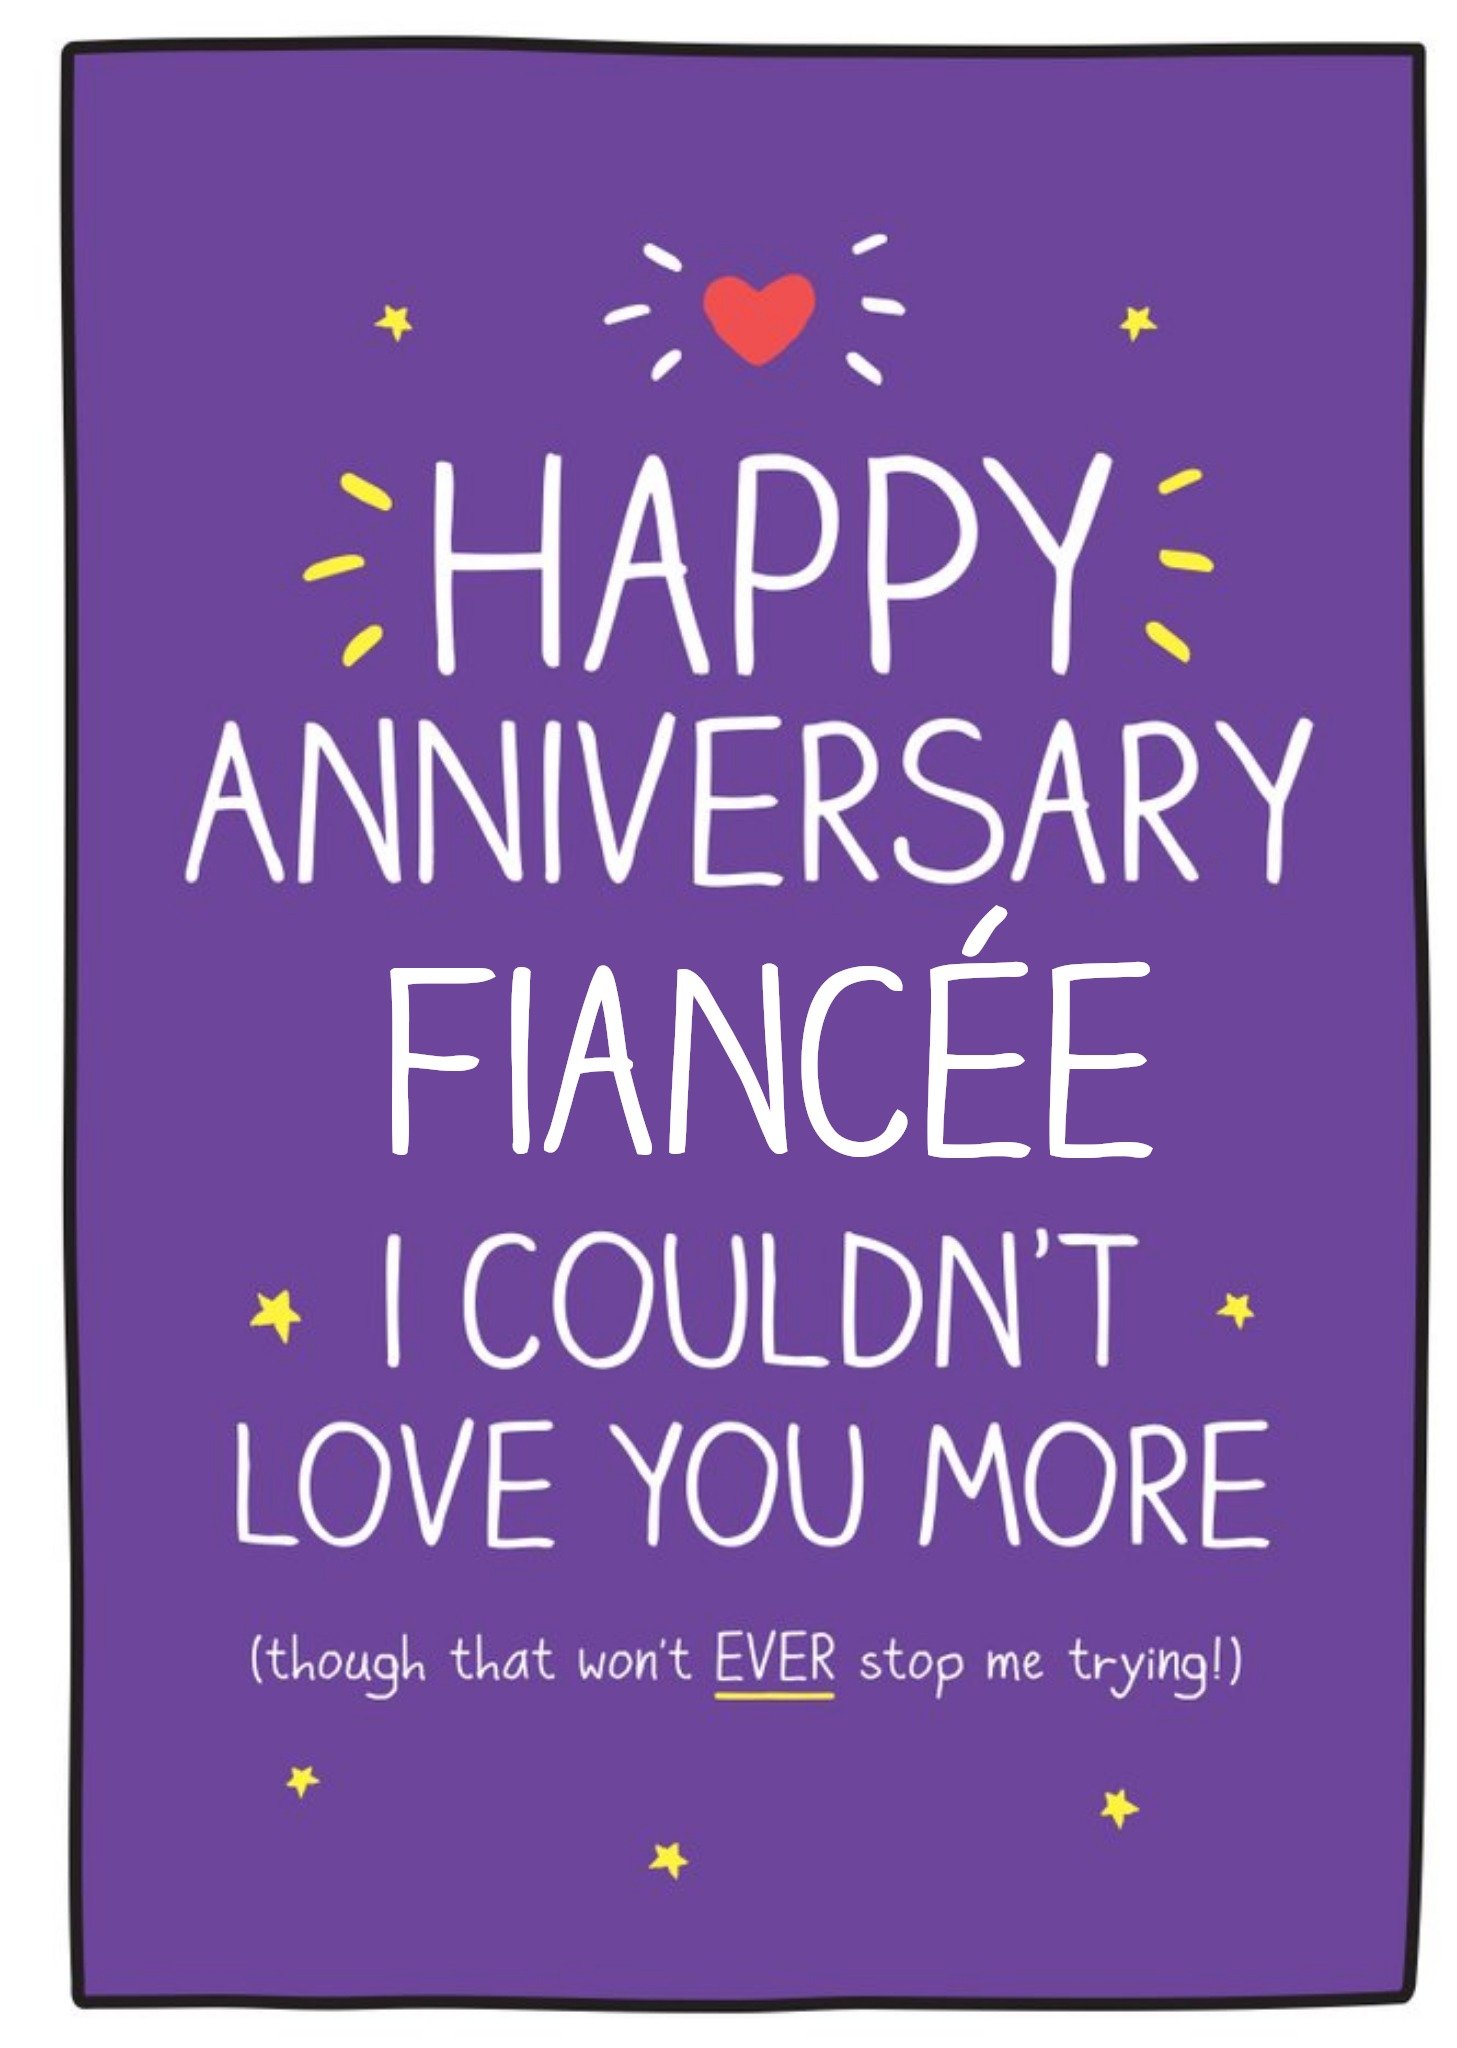 Happy Jackson Anniversary Card - Happy Anniversary Finacee, I Couldn't Love You More Ecard